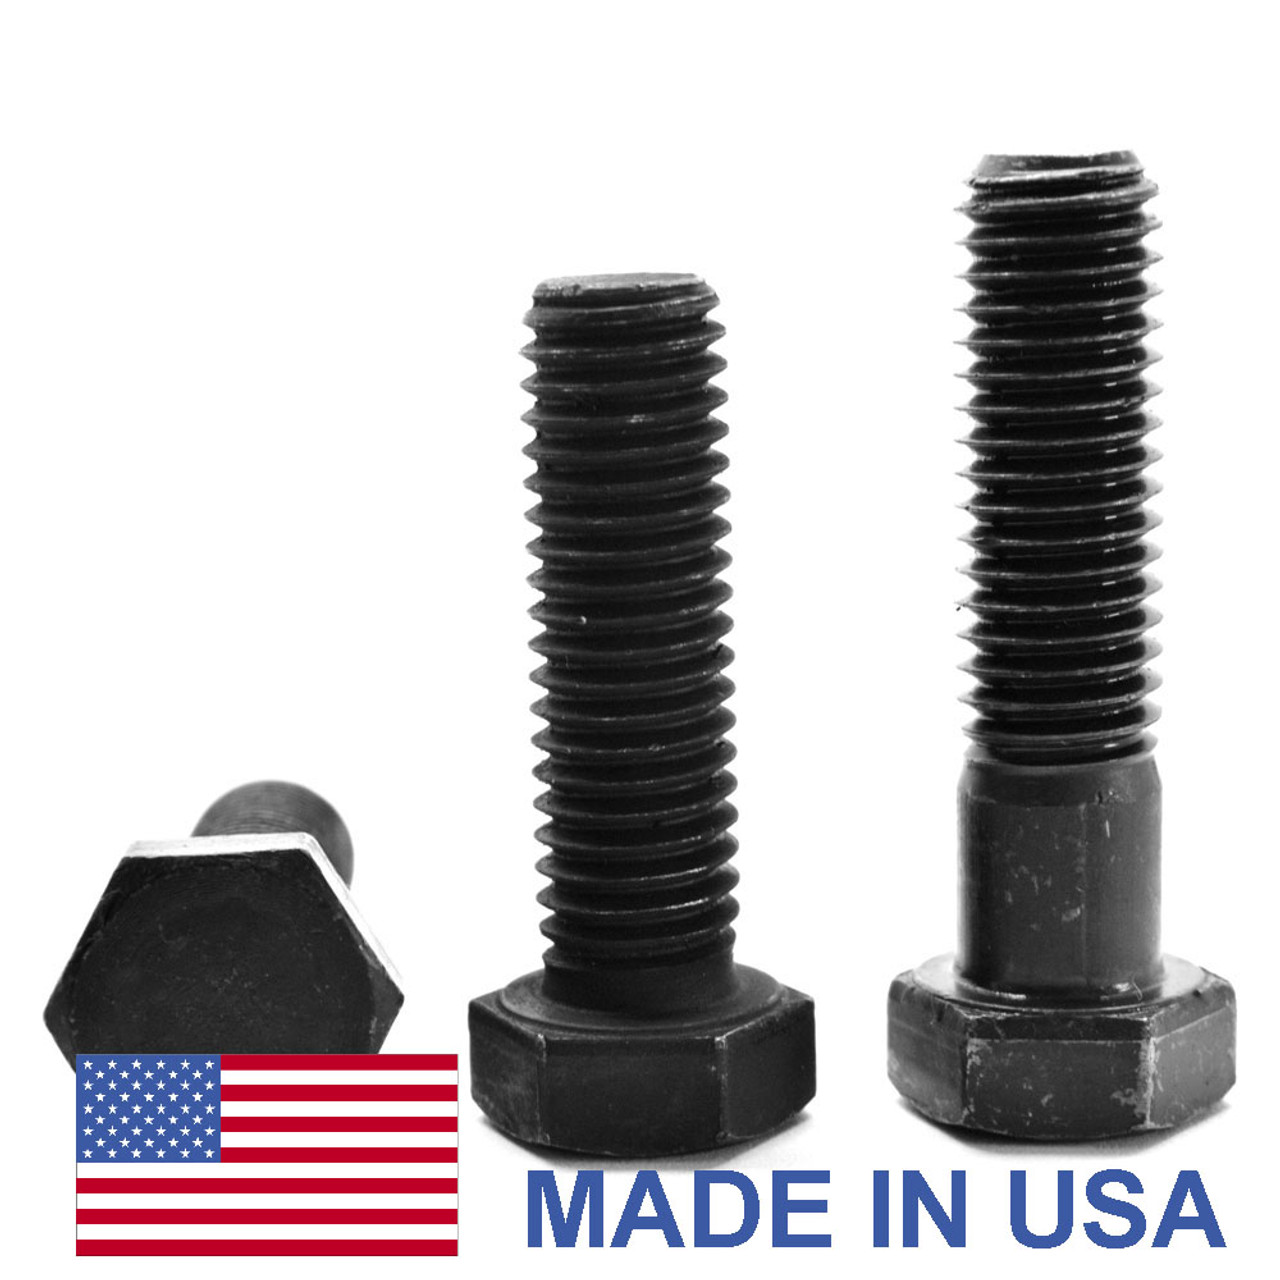 1"-14 x 2" (FT) UNS Thread Grade 8 Hex Cap Screw (Bolt) - USA Alloy Steel Black Oxide